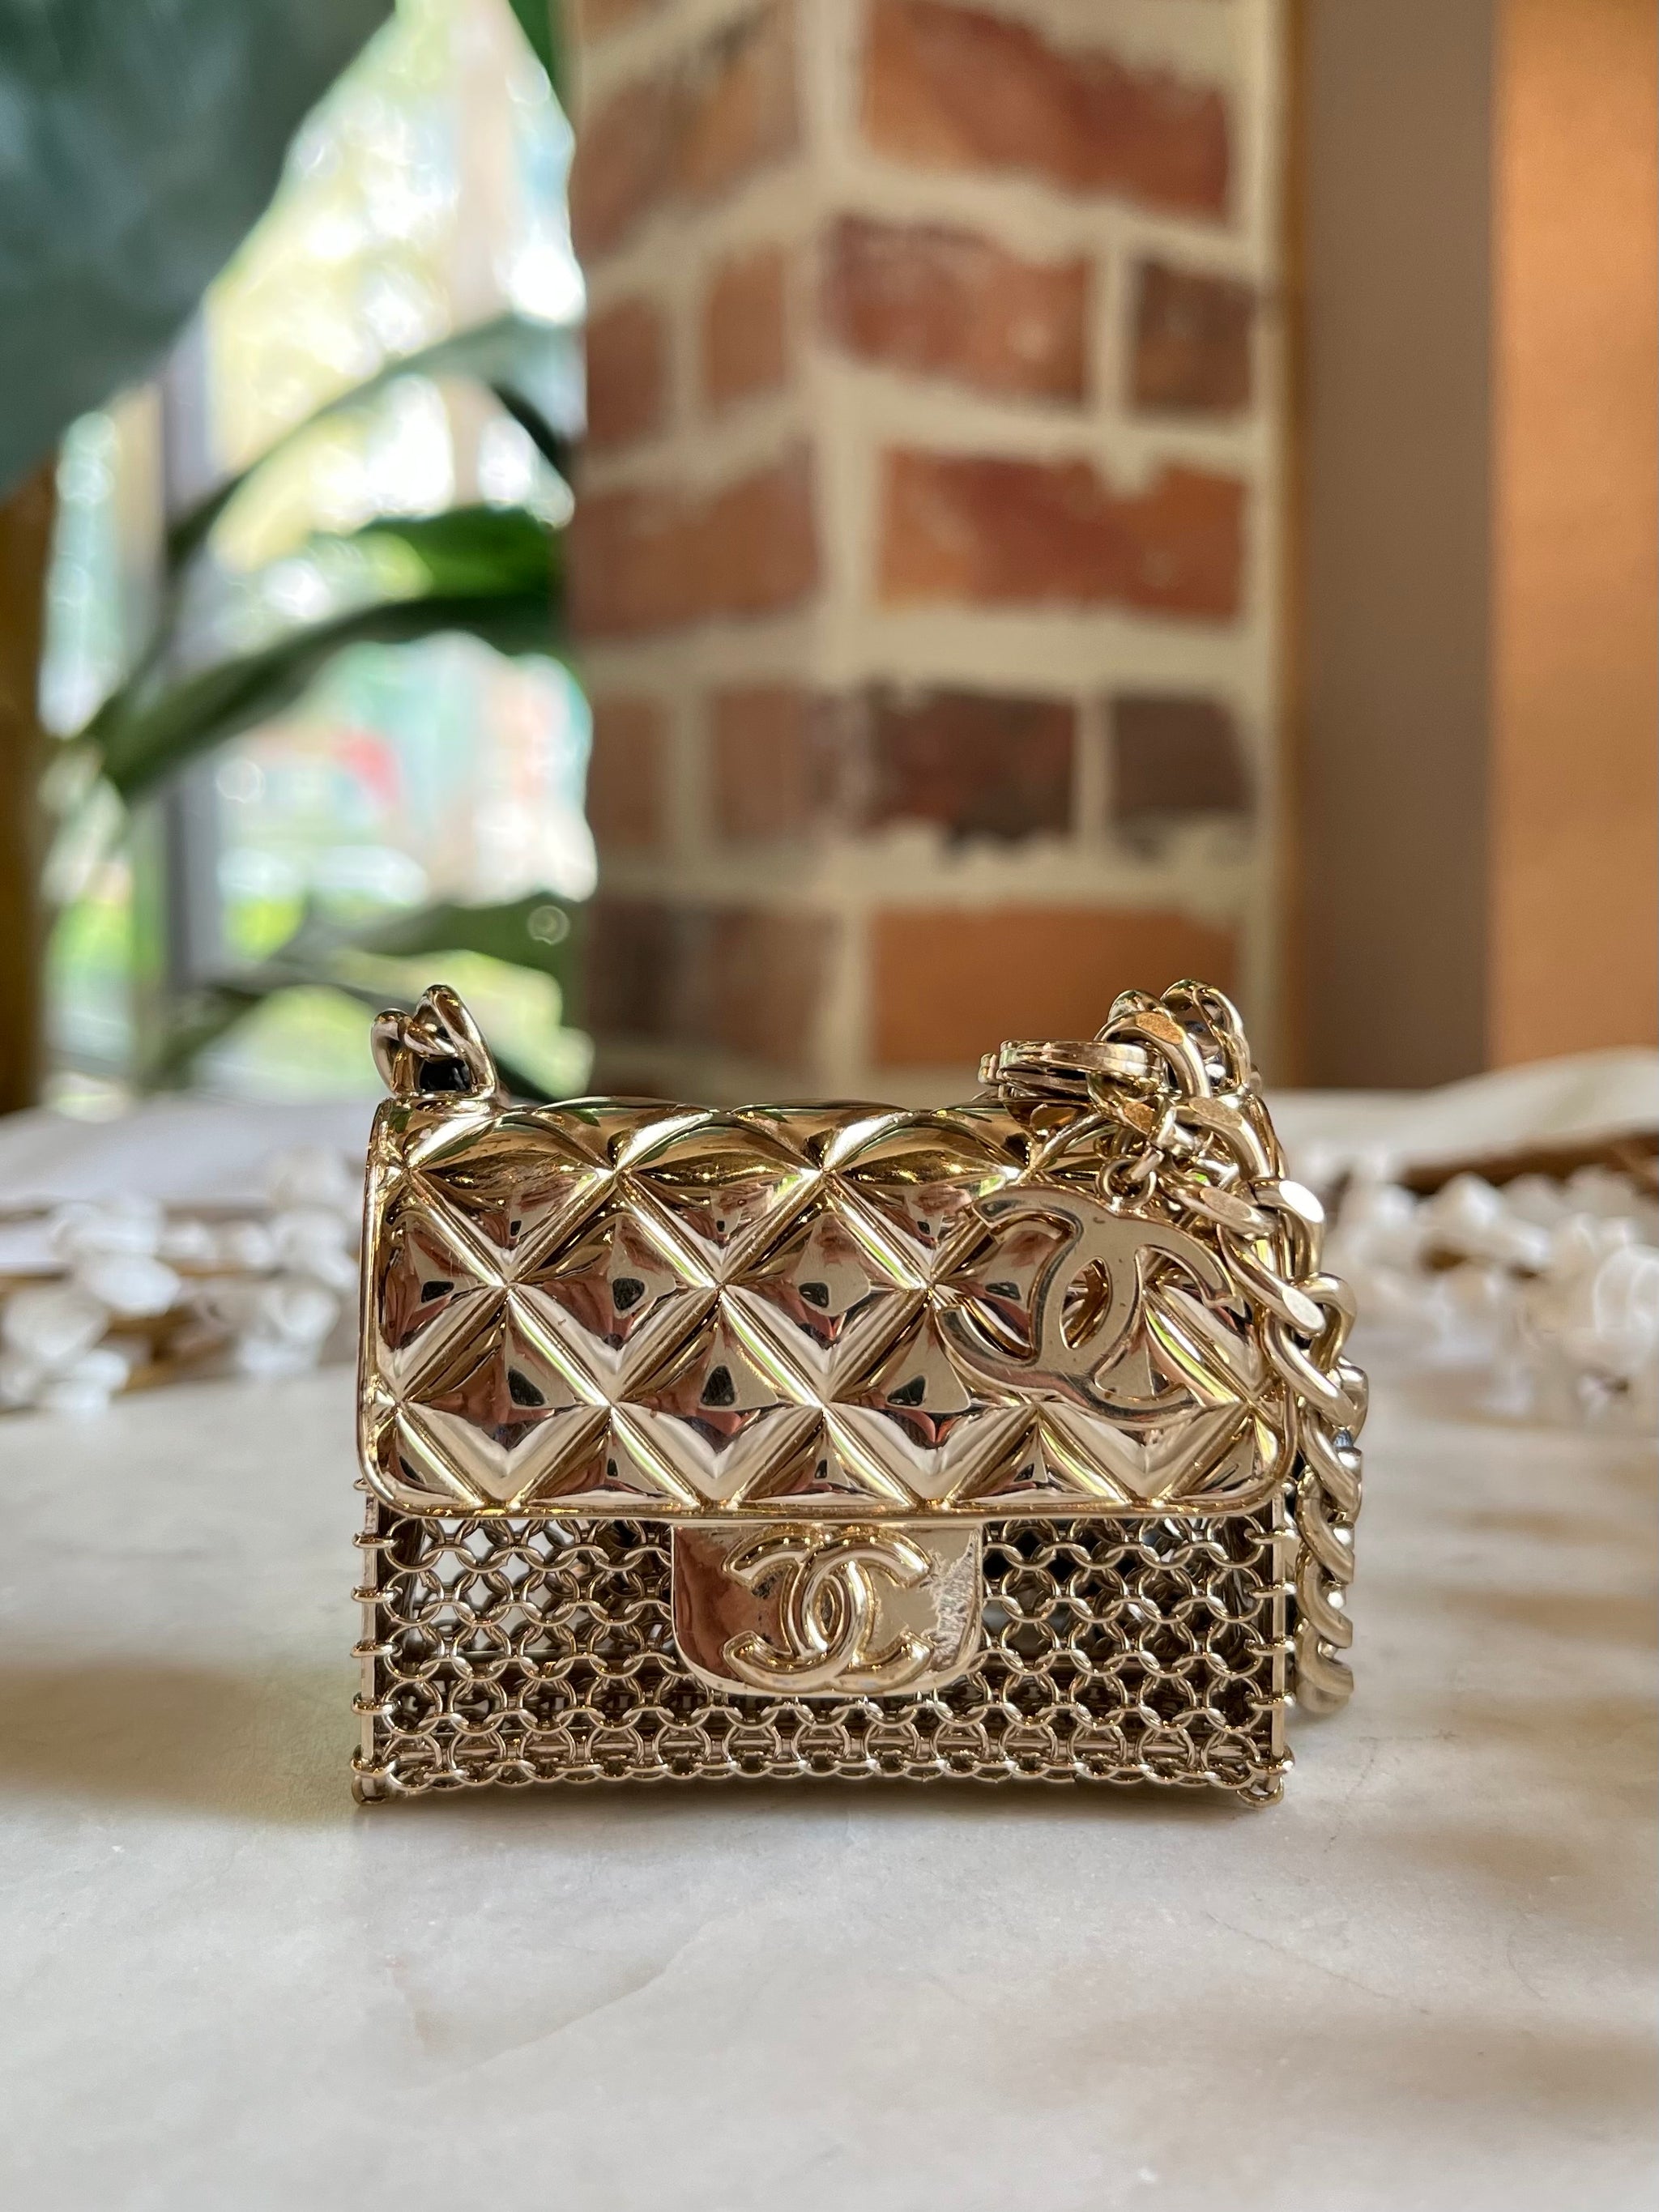 Chanel Gold-Tone Flap Bag Necklace